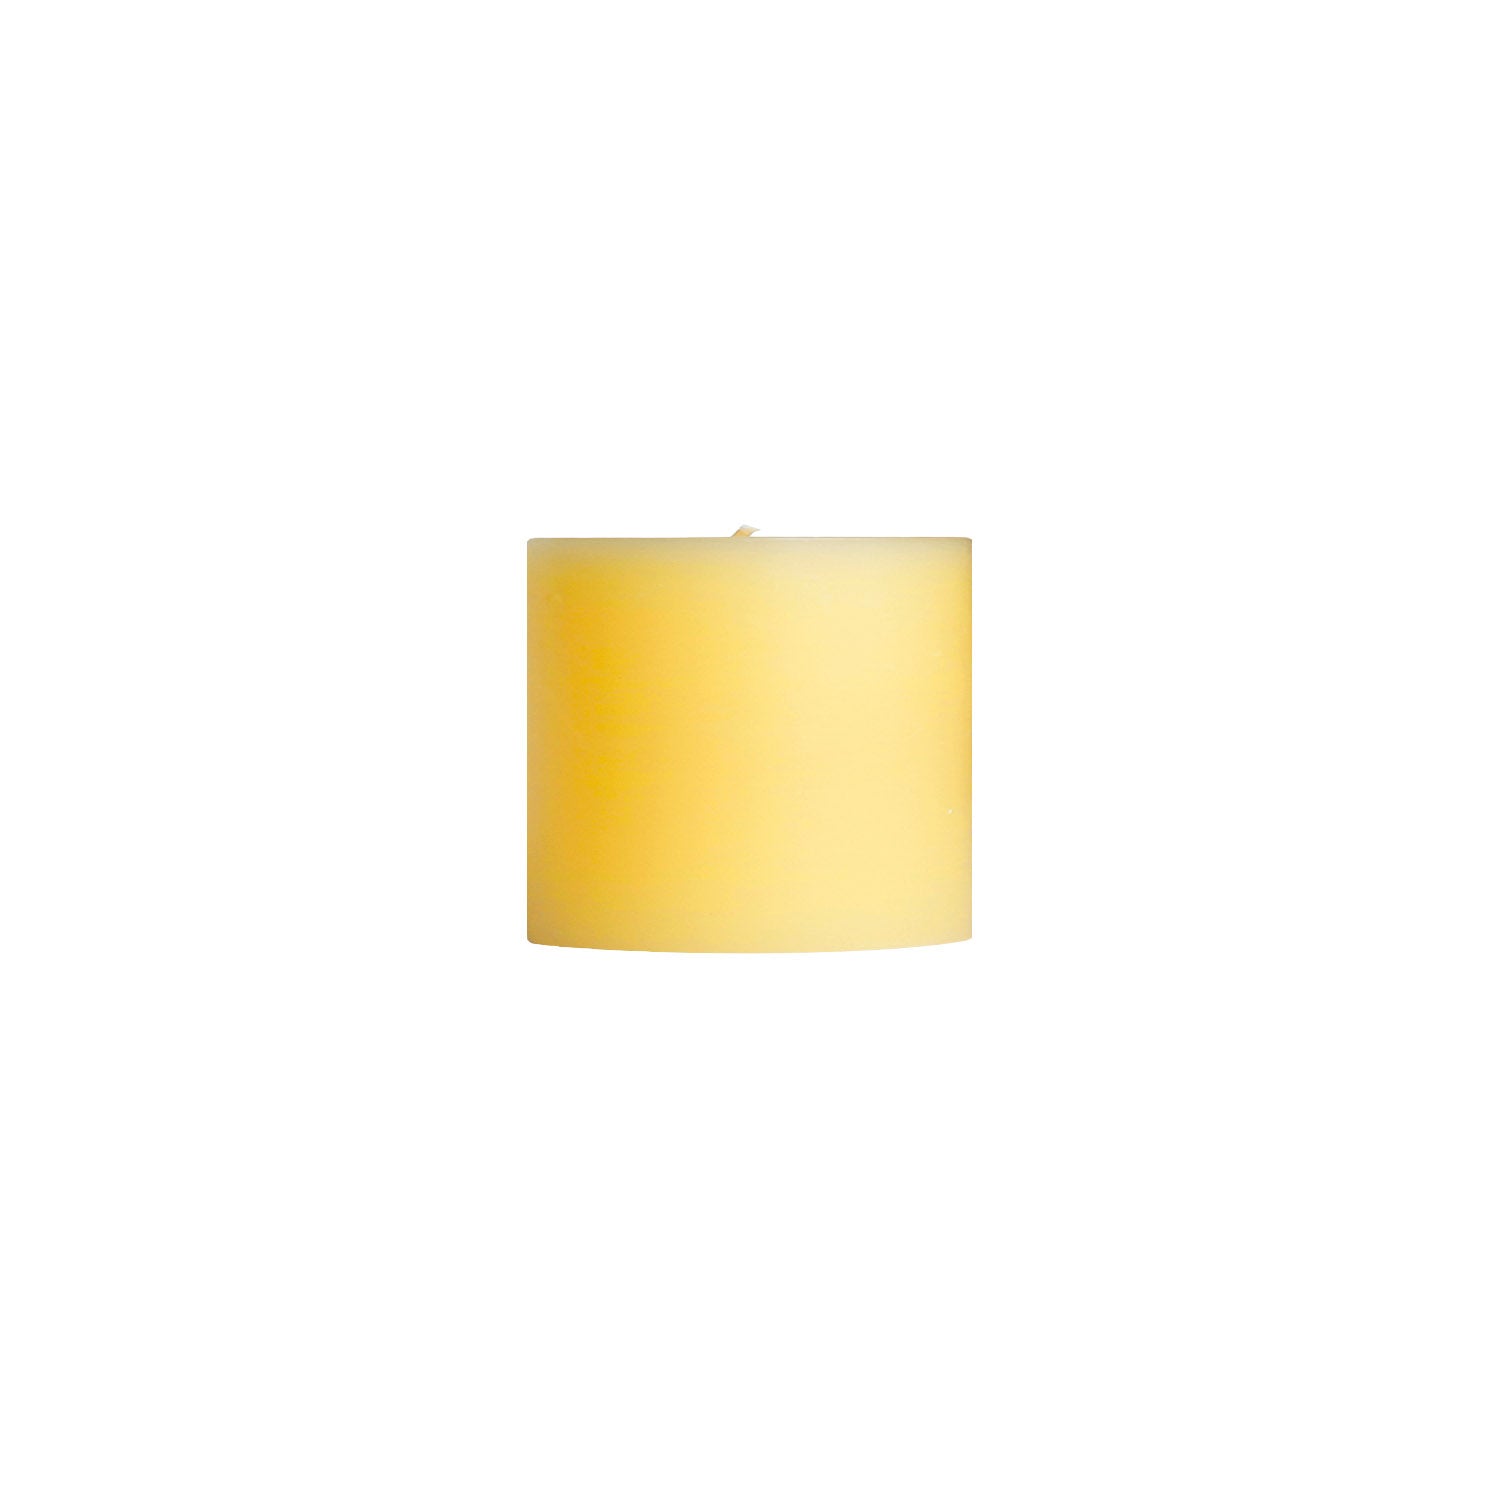 3x3" Rain scented pillar candle